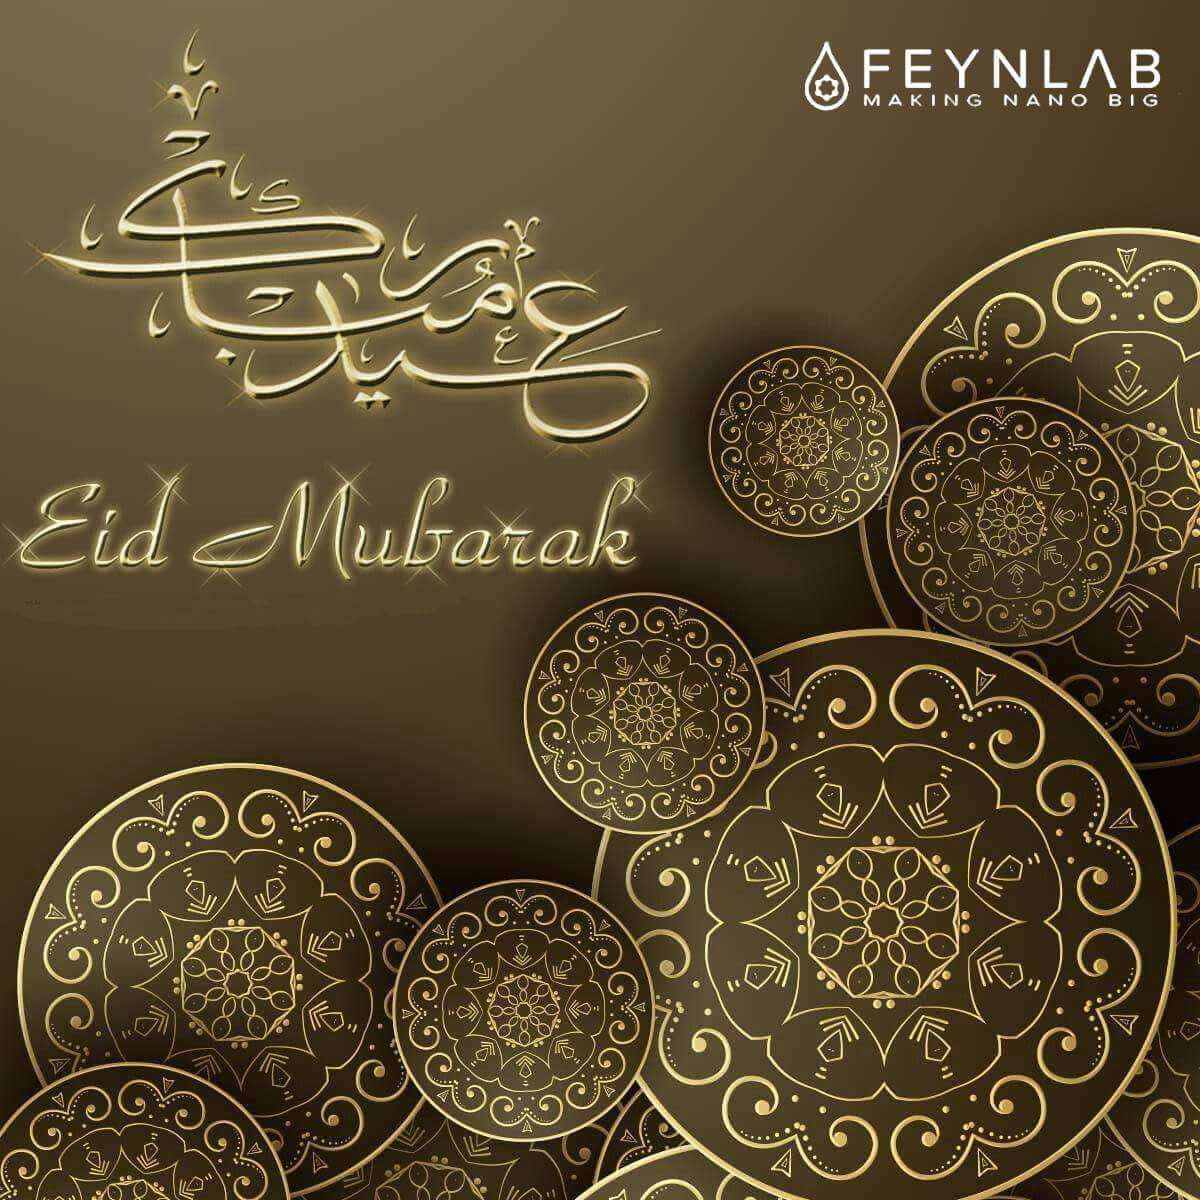 May the blessings of Allah fill your life with peace, joy, and prosperity. Eid Mubarak to you and your family.
goo.gl/wWrP2
#Feynlab #FeynlabIndia #makingnanobig #feeltheheal #EidMubarak2018